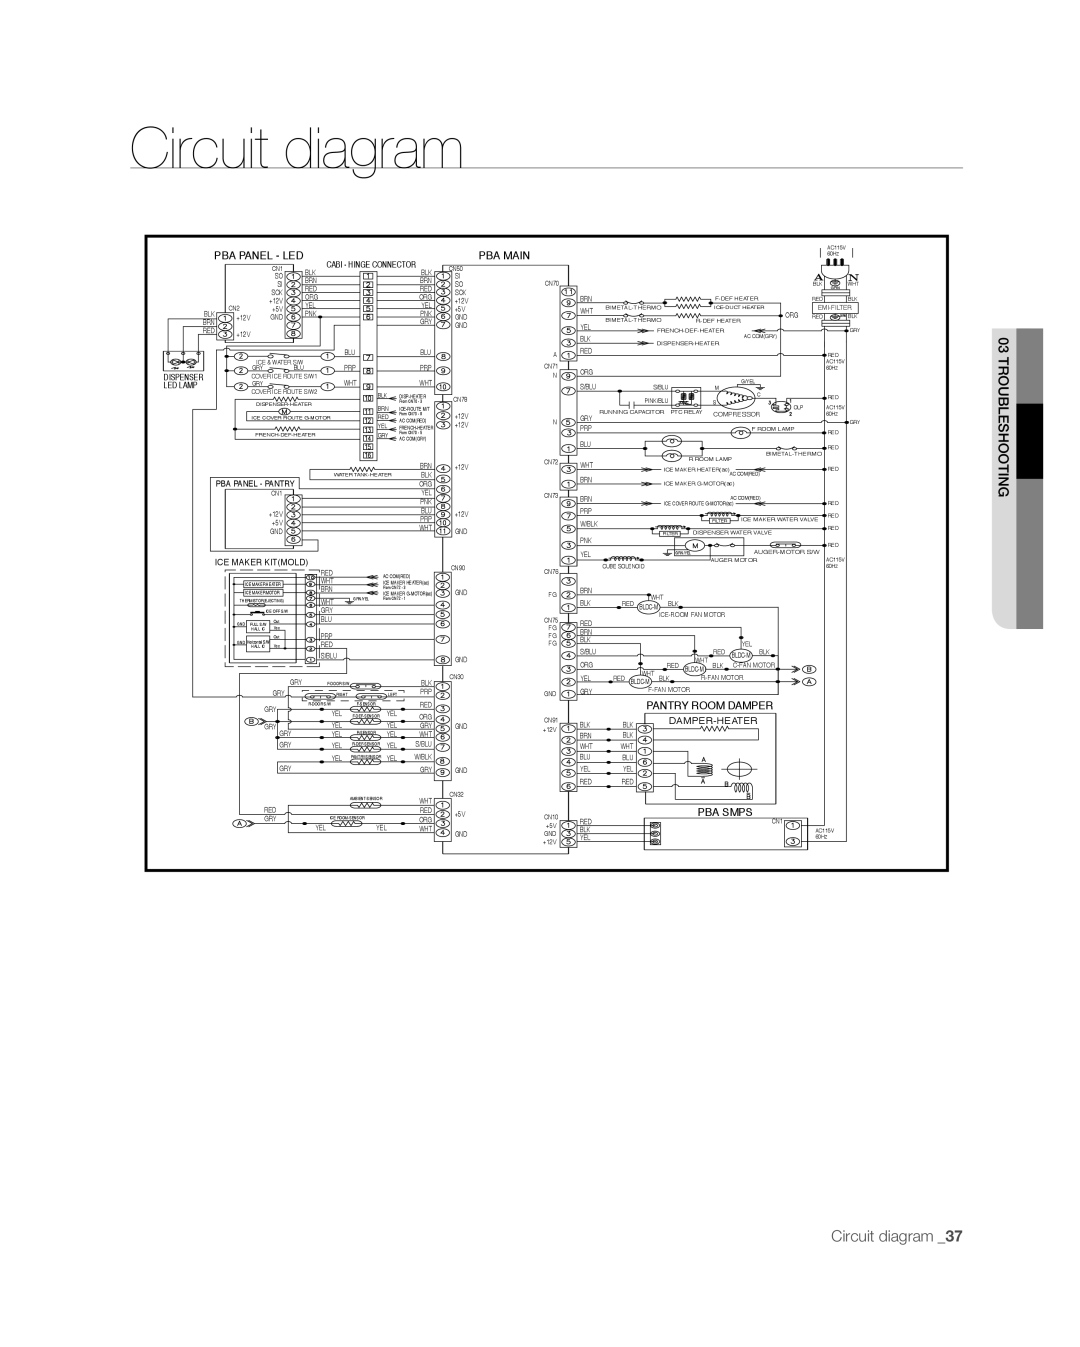 Samsung RF267ABPN Circuit diagram, Pba Panel - Led, Pba Main, Pantry Room Damper, Pba Smps, Cabi - Hinge Connector 